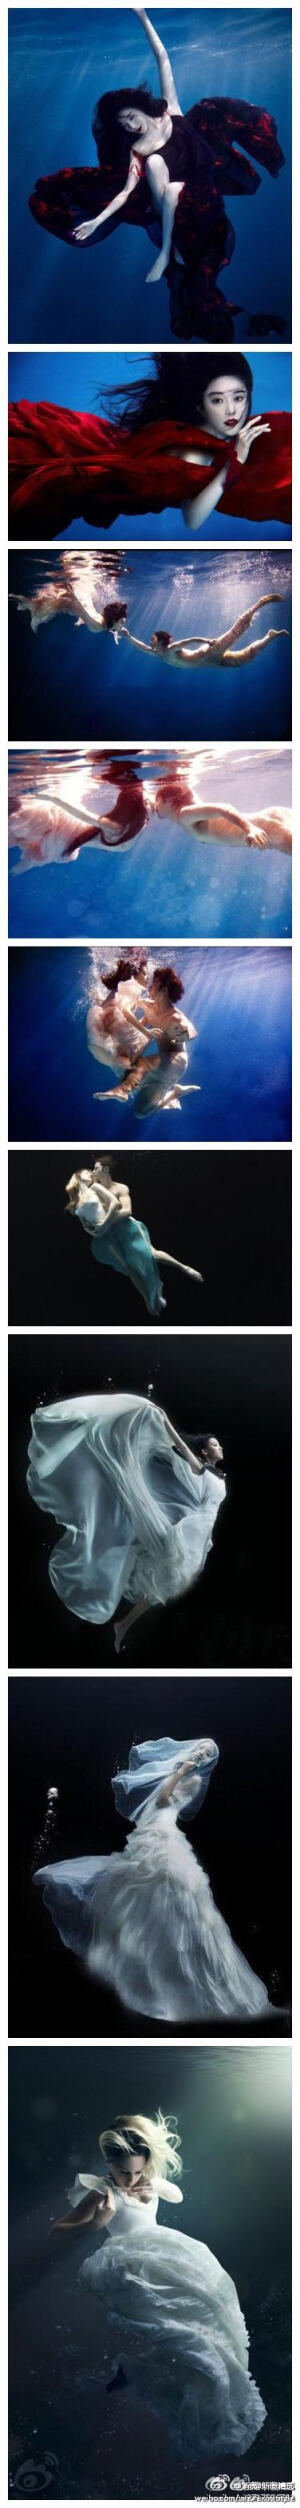 【Tsan】❤  好喜欢的水下婚照